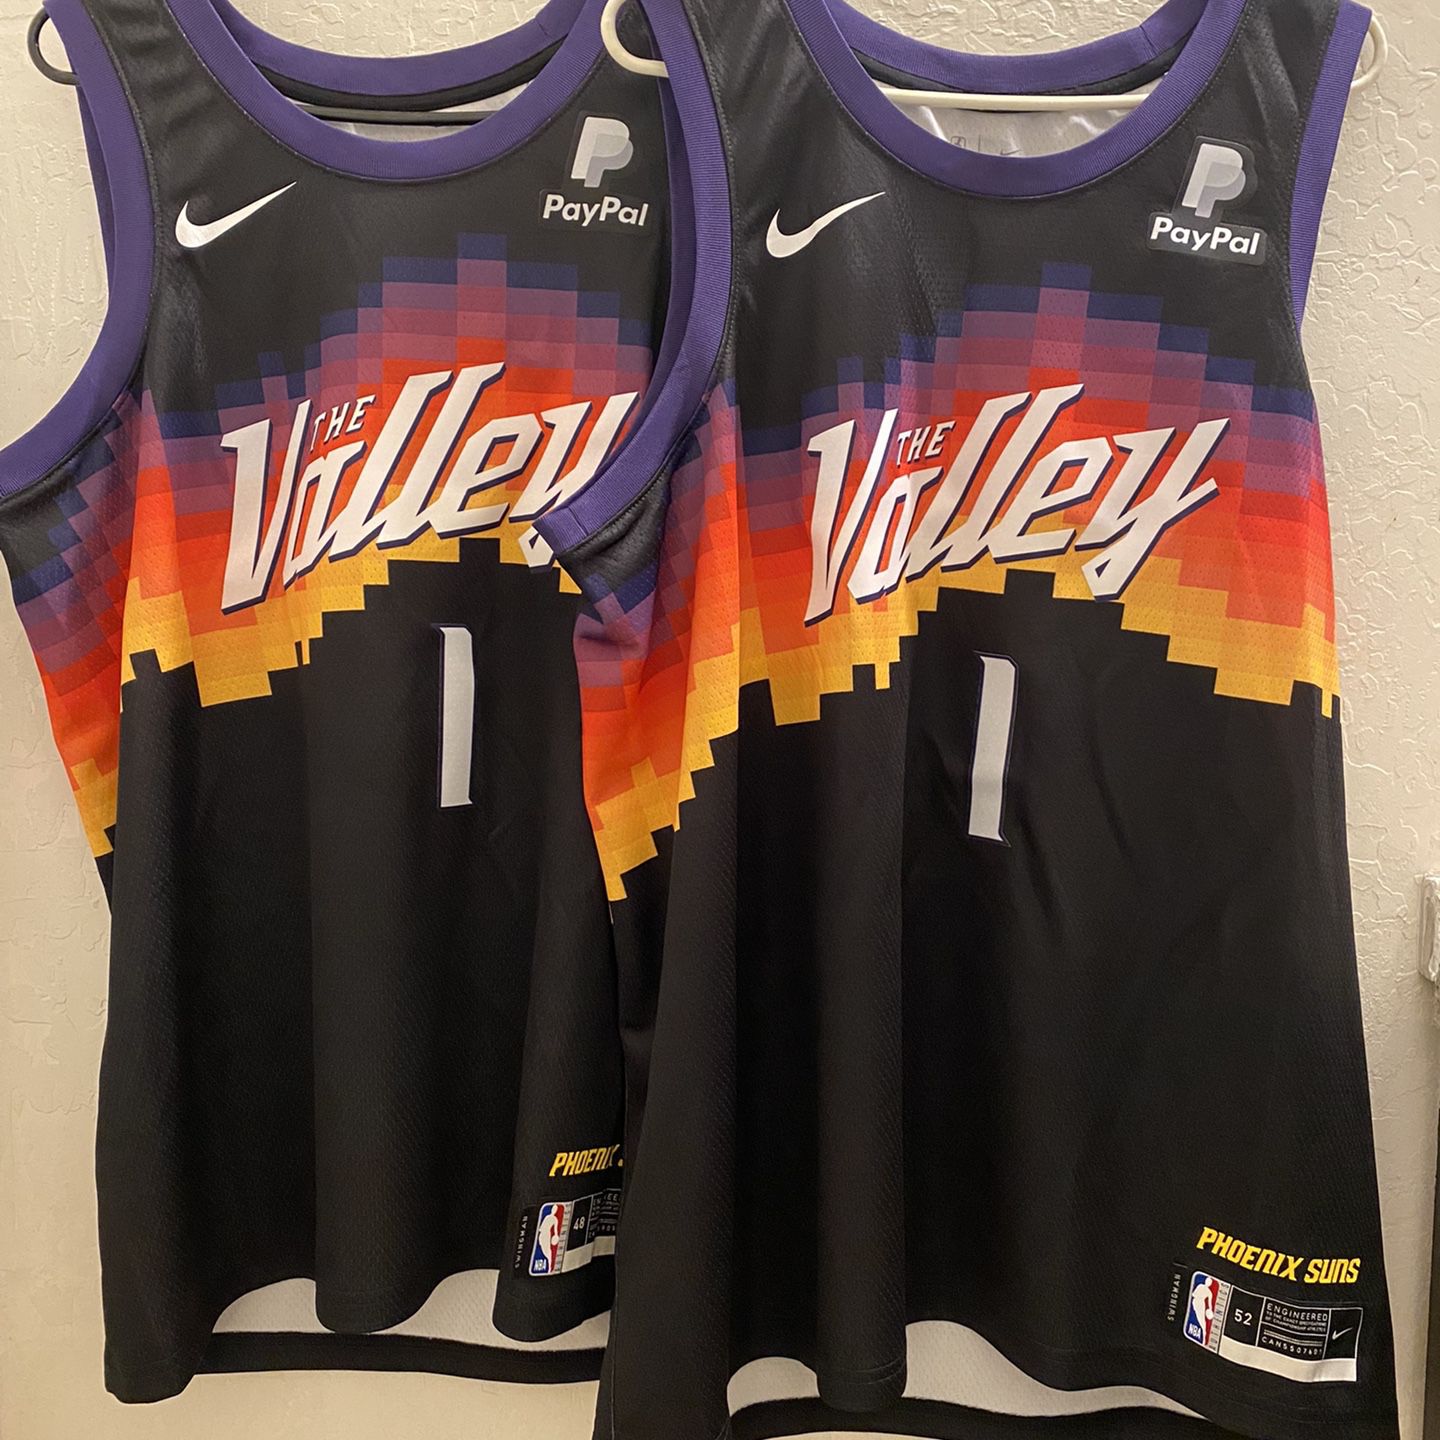 Phoenix Suns jersey/shorts for Sale in Mesa, AZ - OfferUp